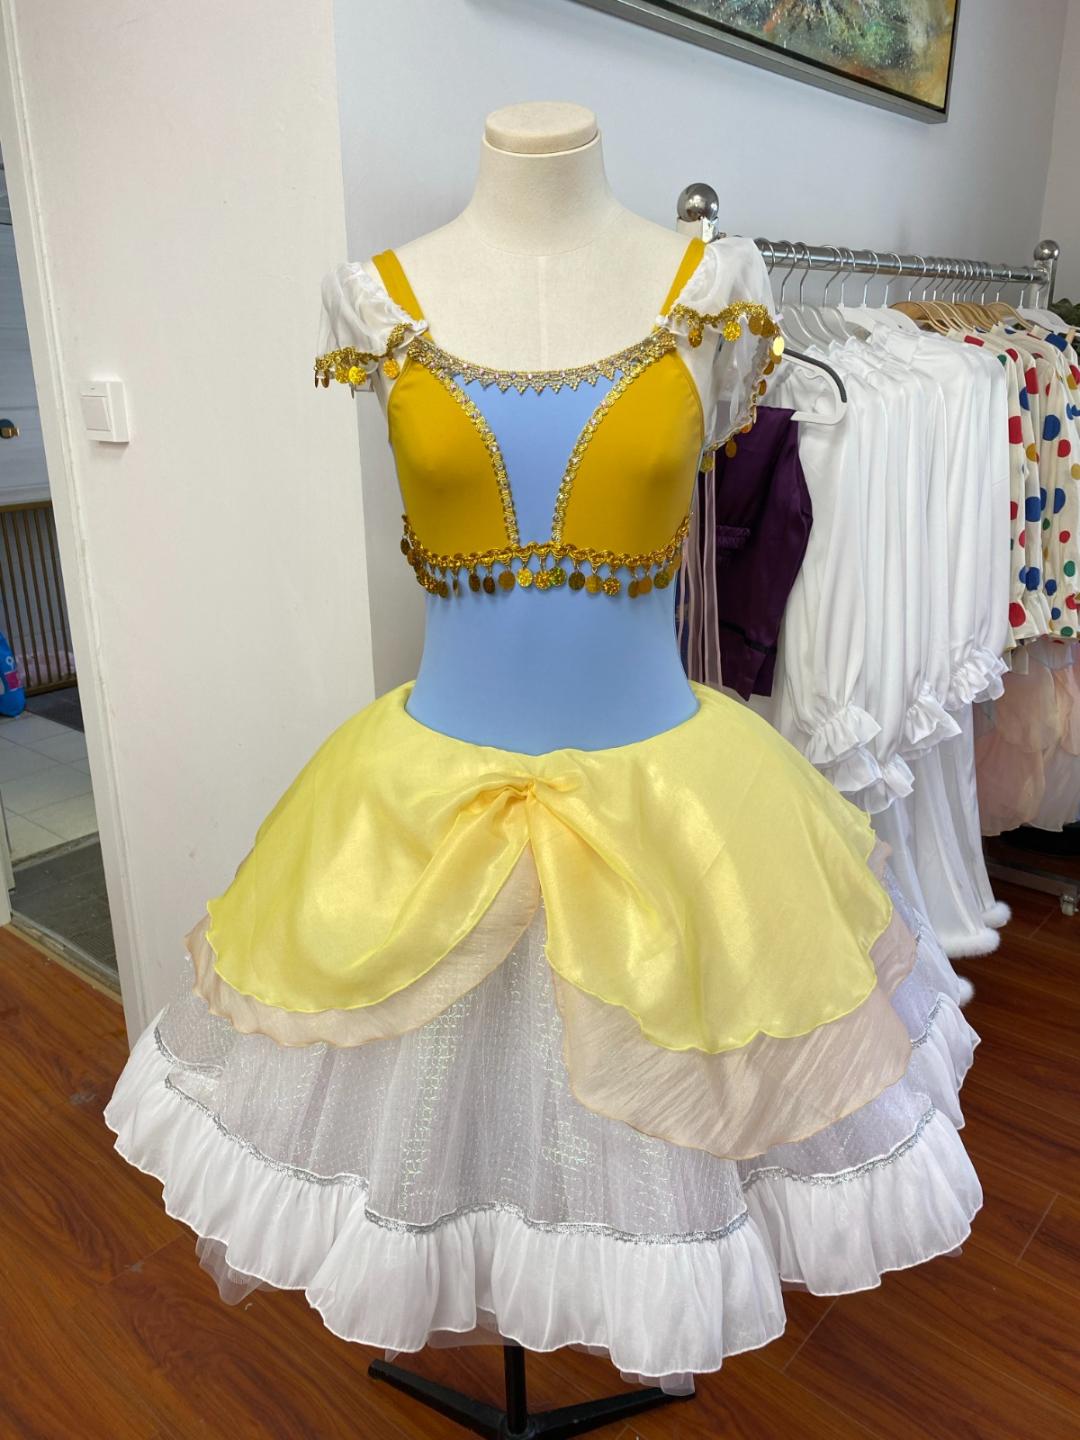 SALE - Esmeralda's Friend - Dancewear by Patricia